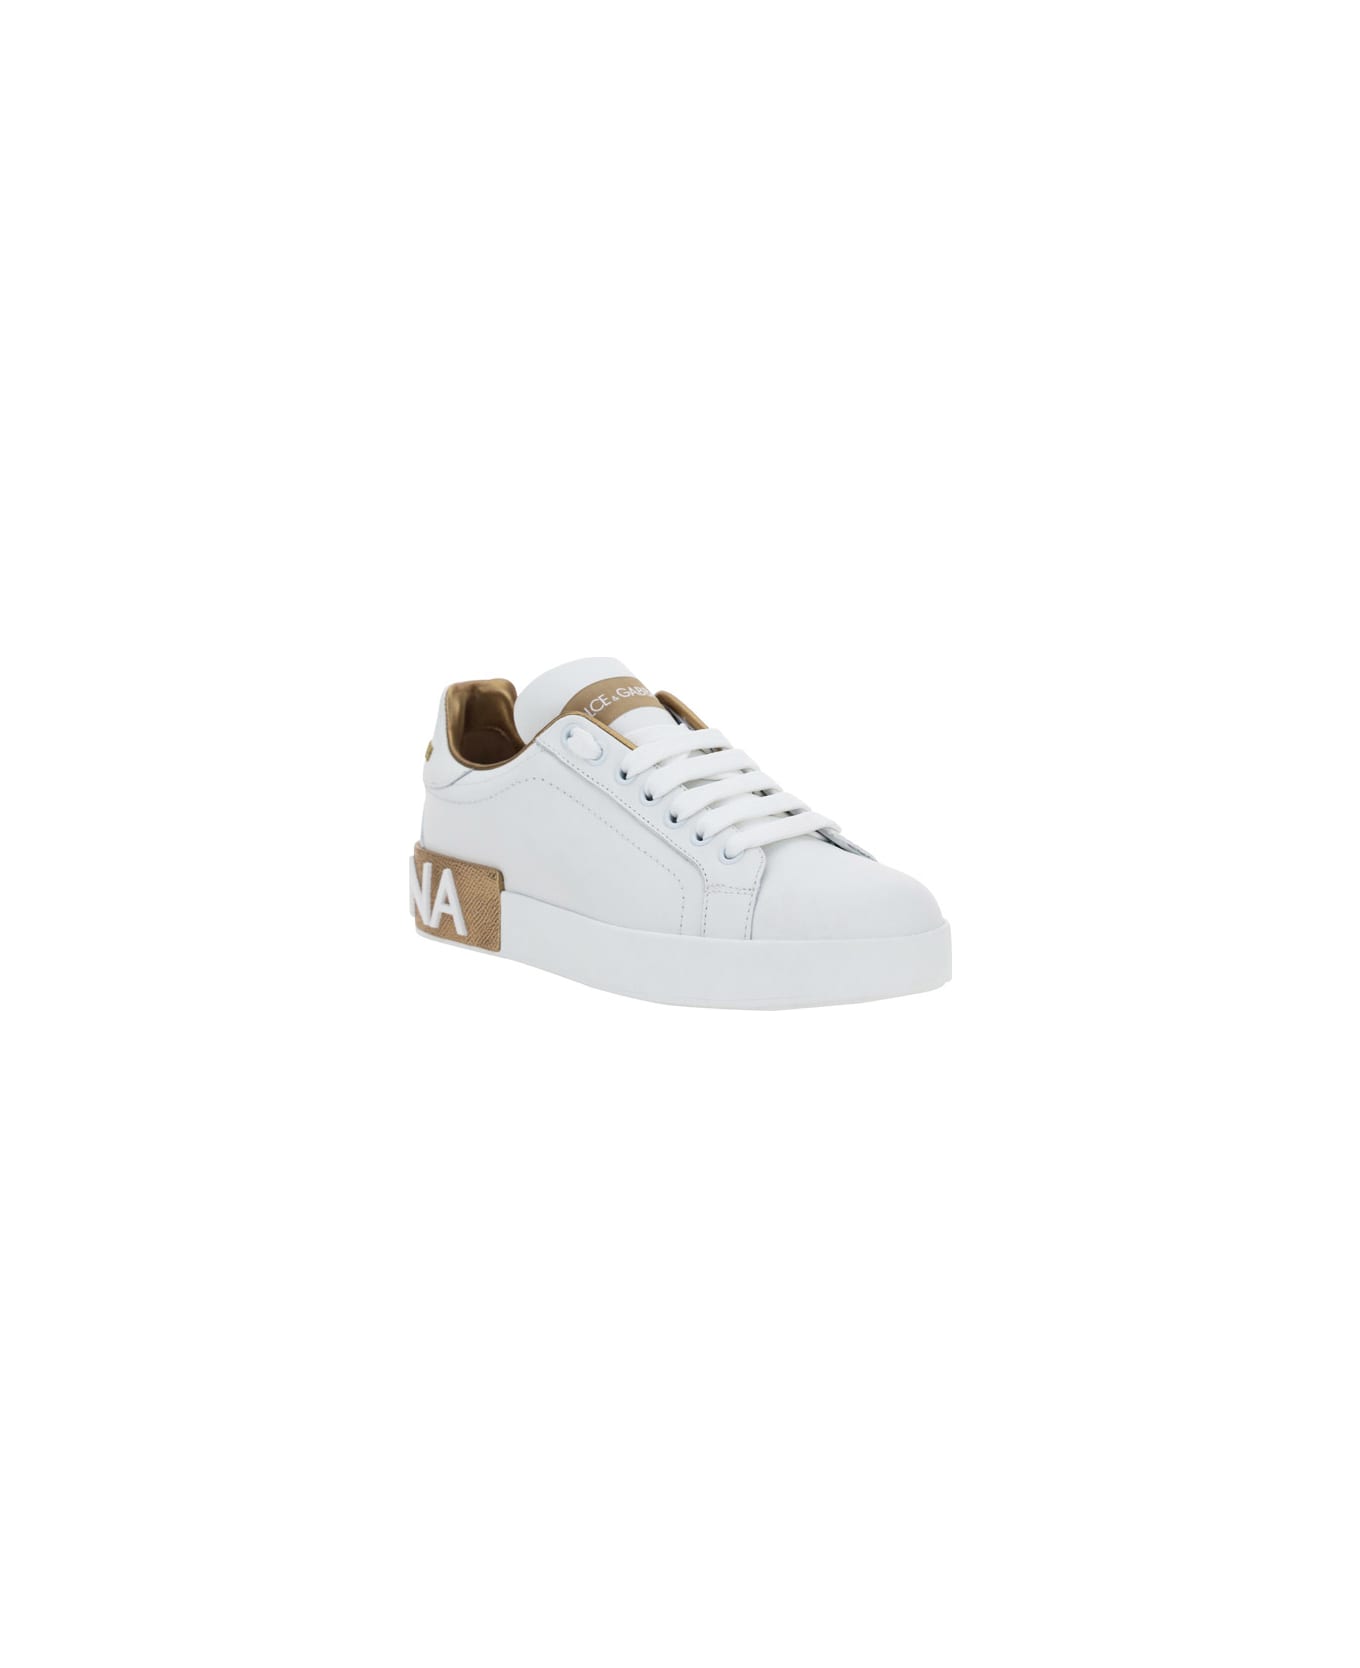 Dolce & Gabbana Portofino Sneakers - White